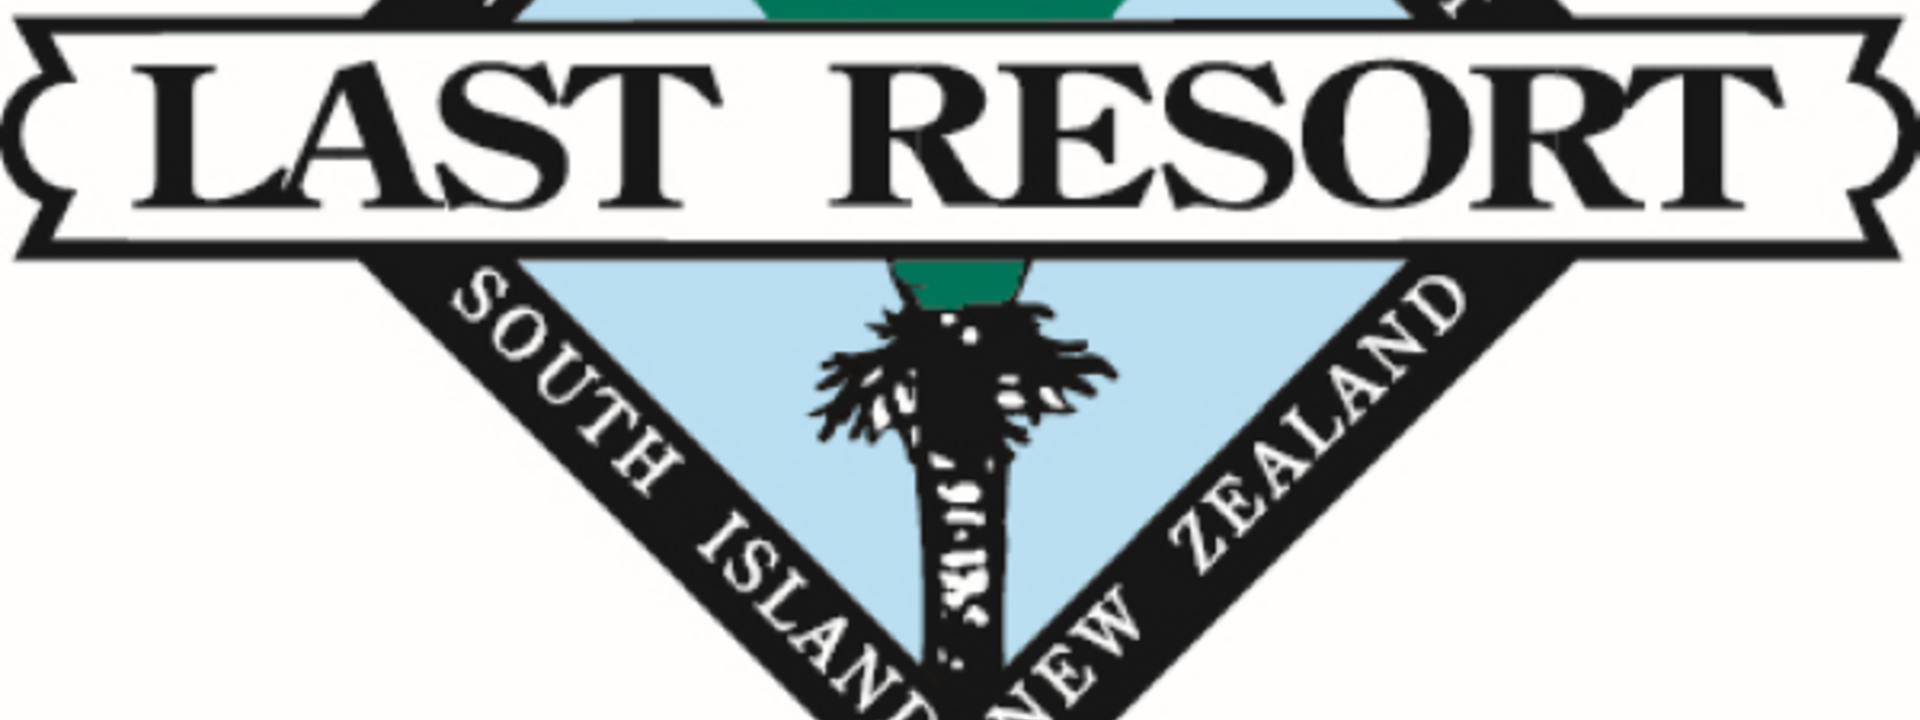 Last Resort Logo.png